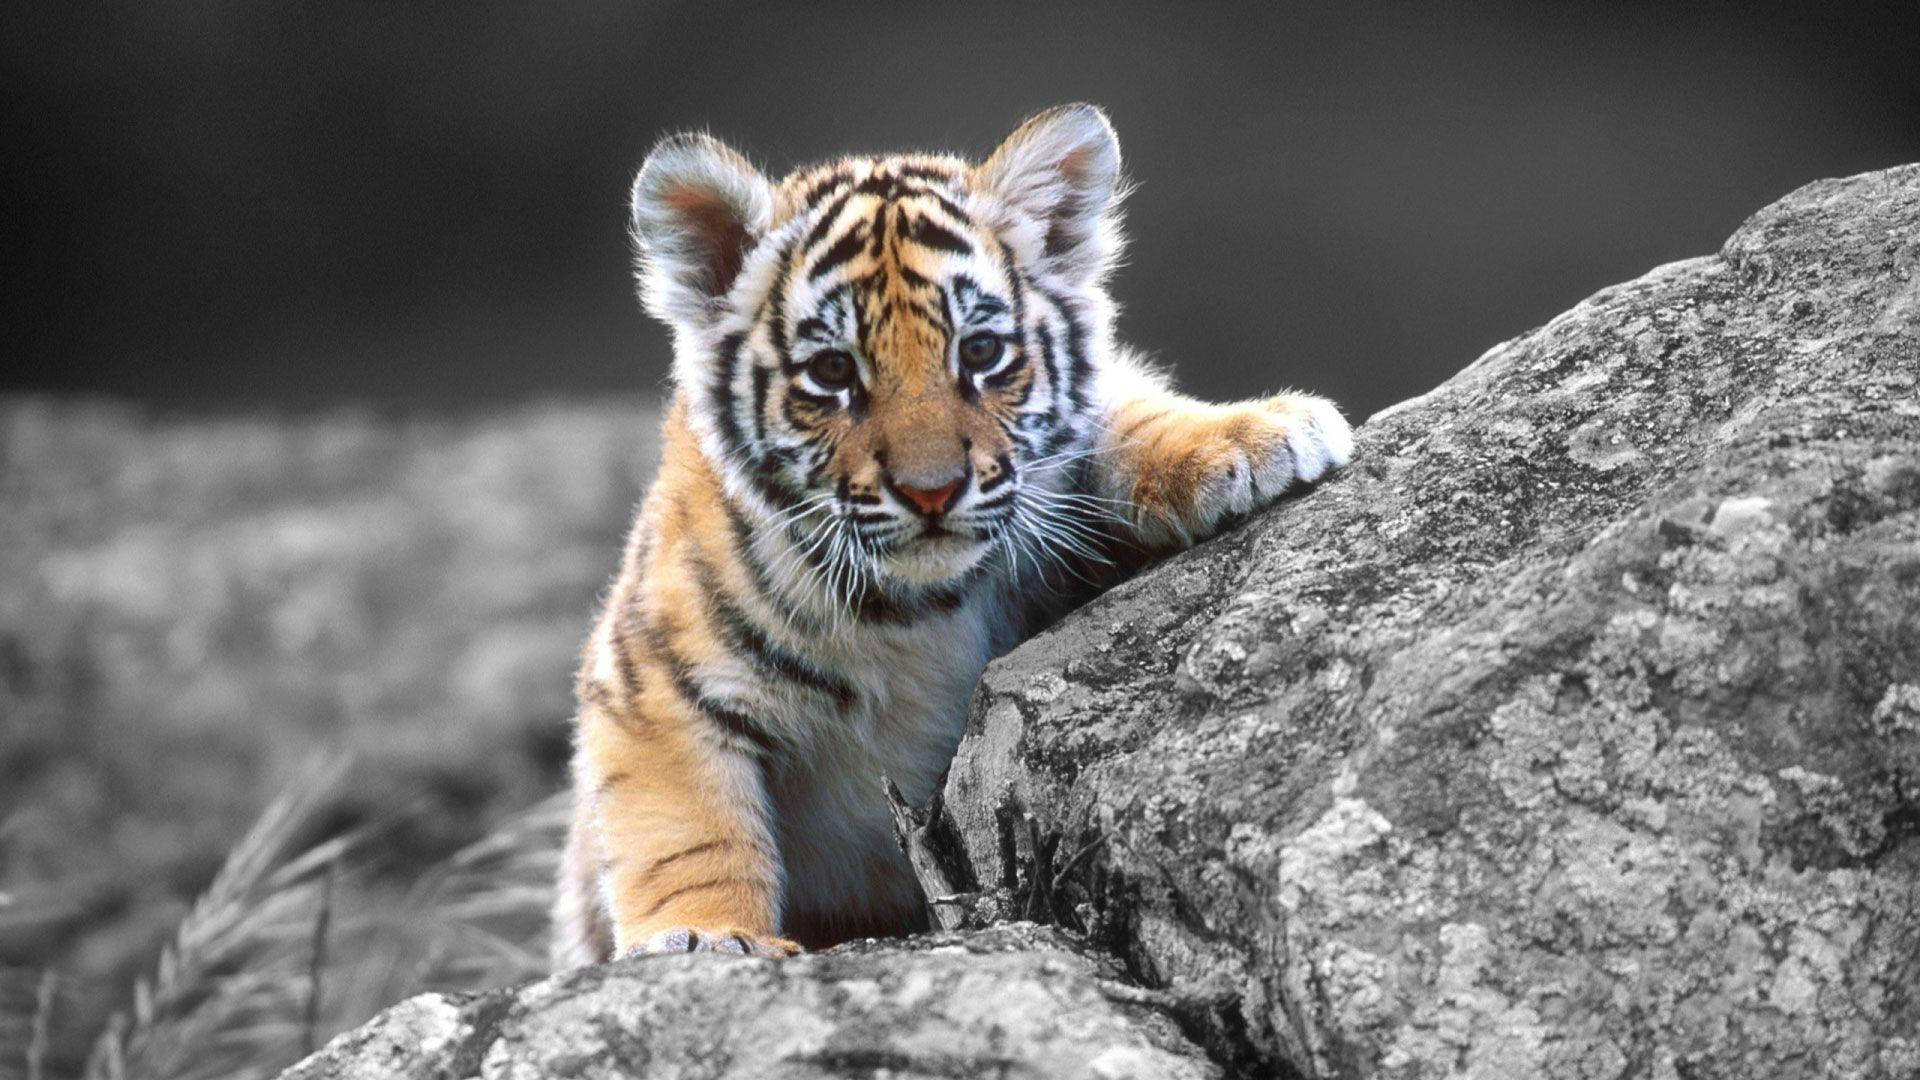 Baby Tiger At Rocks Wallpaper